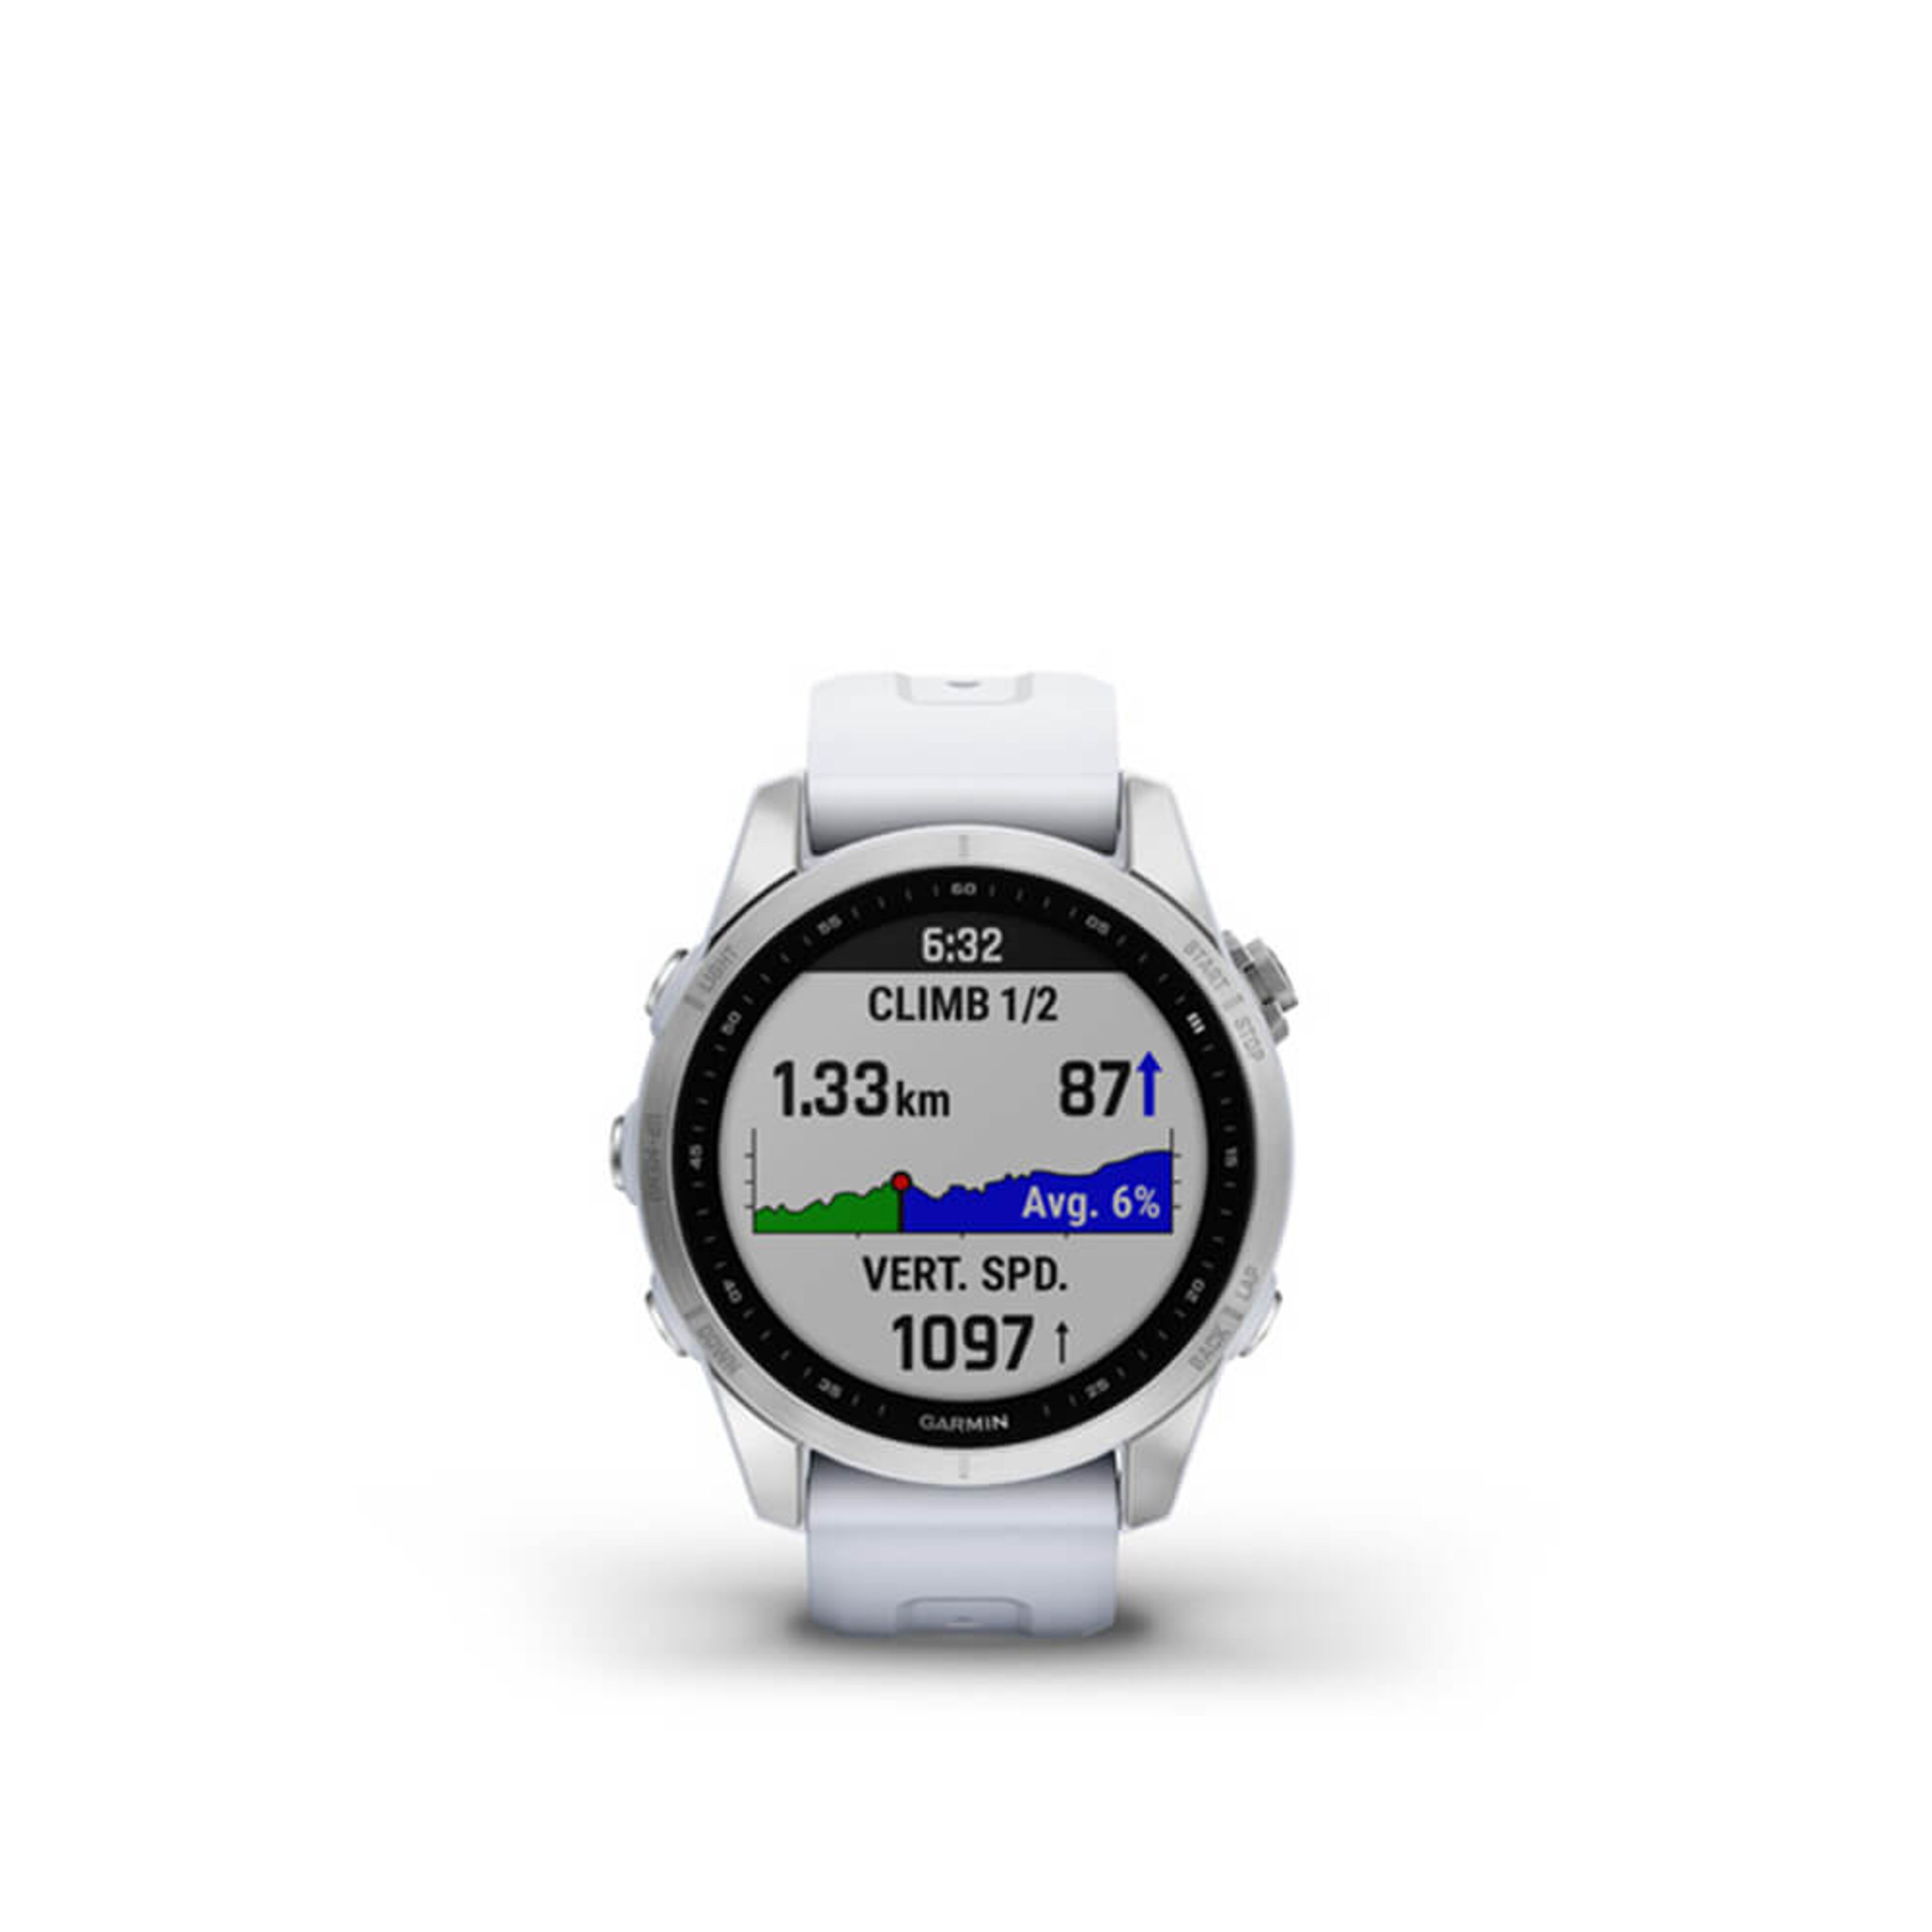 Garmin Fenix 7S Smartwatch - Silver with Graphite Band